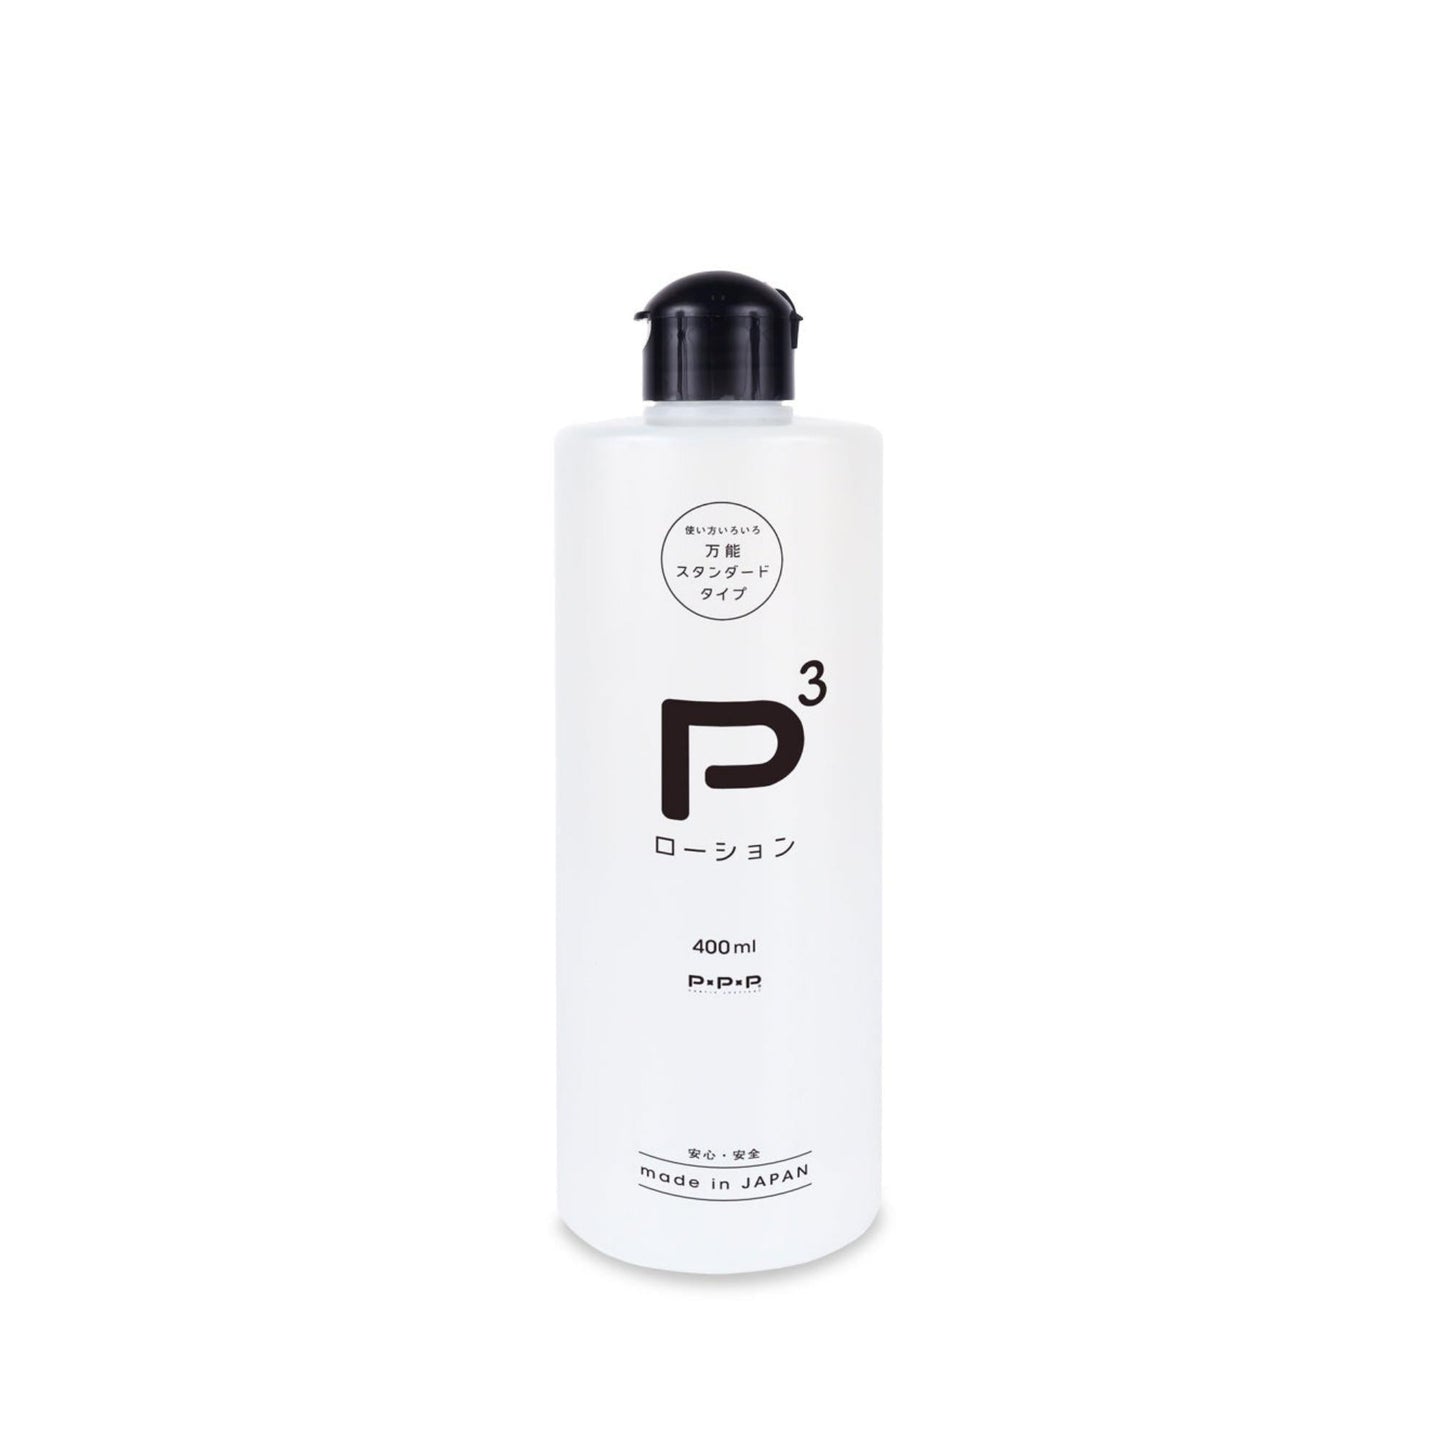 PPP P3 全方位多功能潤滑液 潤滑液 400 ml 購買